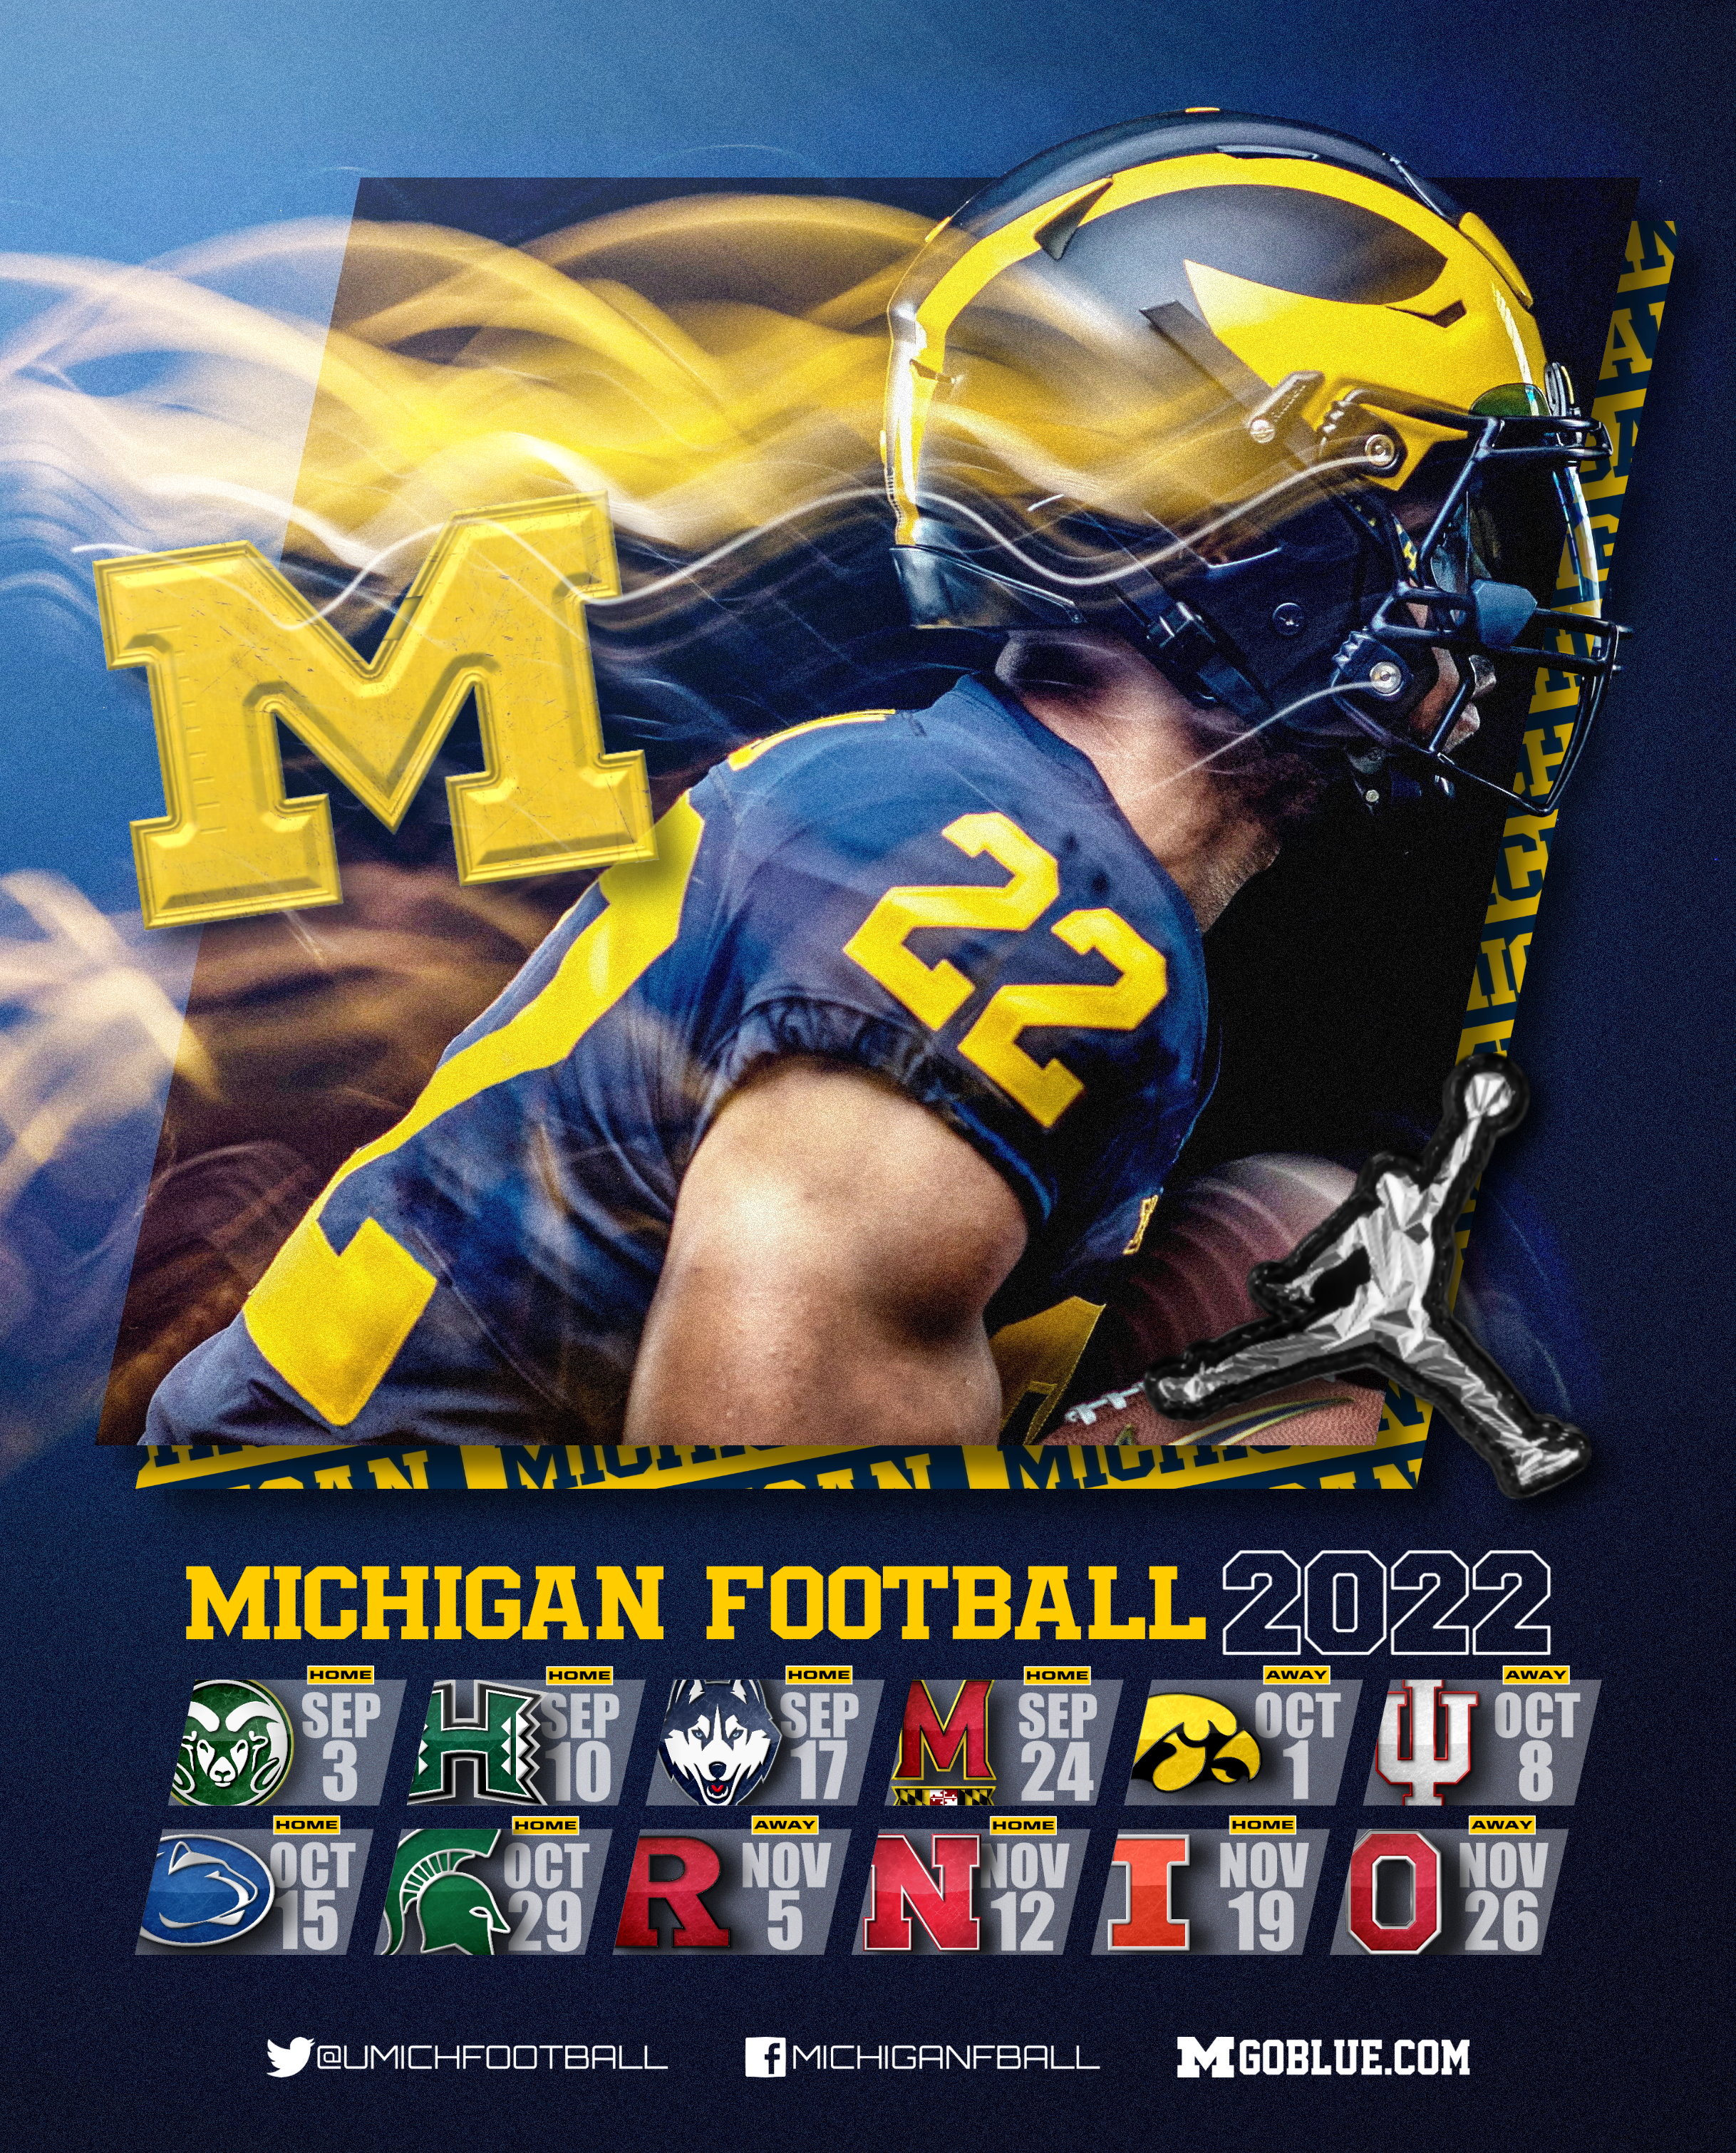 Michigan Wolverines Football Schedule 2022 Michigan Football On Twitter: "𝐓𝐡𝐞 𝐌𝐢𝐜𝐡𝐢𝐠𝐚𝐧 𝐅𝐨𝐨𝐭𝐛𝐚𝐥𝐥  𝟐𝟎𝟐𝟐 𝐒𝐜𝐡𝐞𝐝𝐮𝐥𝐞! 🗞 Https://T.co/M6Z57Mi9Qh 🎟  Https://T.co/Zp7N31Szdy #Goblue Https://T.co/Bab5Dwgoqv" / Twitter